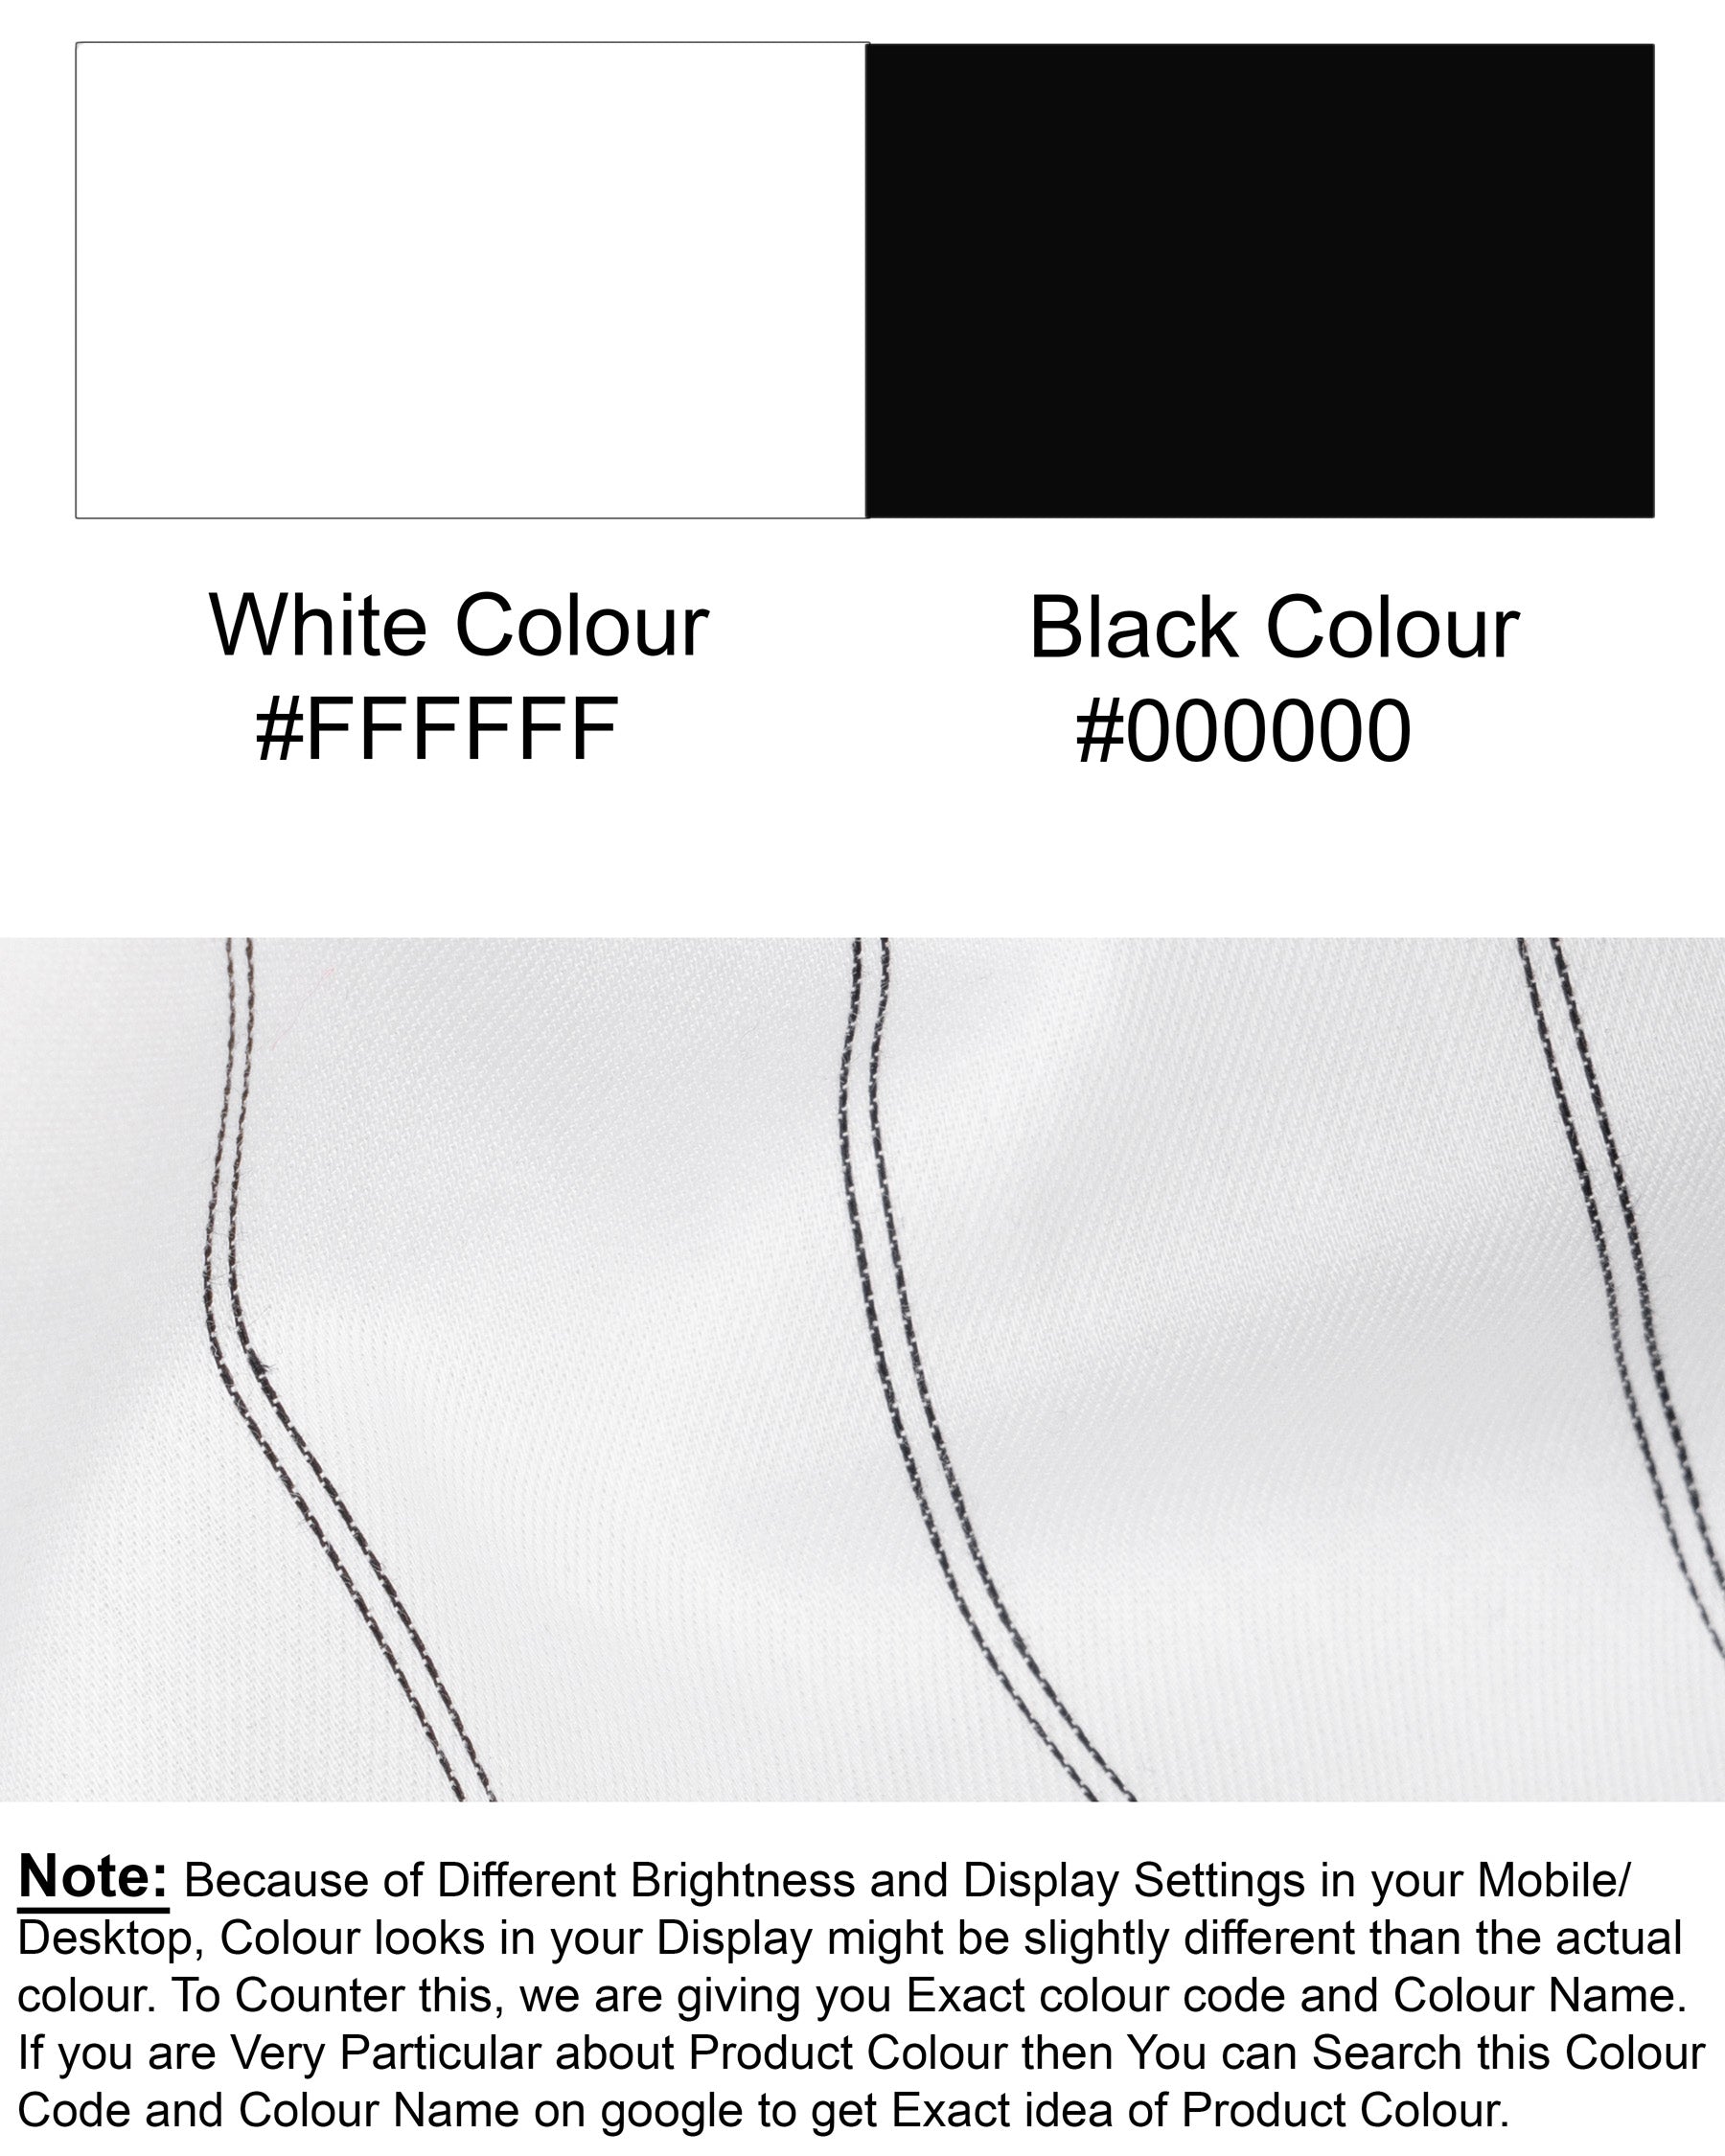 Bright White with Jade Black Twill Striped Premium Cotton Shirt 5270-BLK-38, 5270-BLK-H-38, 5270-BLK-39, 5270-BLK-H-39, 5270-BLK-40, 5270-BLK-H-40, 5270-BLK-42, 5270-BLK-H-42, 5270-BLK-44, 5270-BLK-H-44, 5270-BLK-46, 5270-BLK-H-46, 5270-BLK-48, 5270-BLK-H-48, 5270-BLK-50, 5270-BLK-H-50, 5270-BLK-52, 5270-BLK-H-52